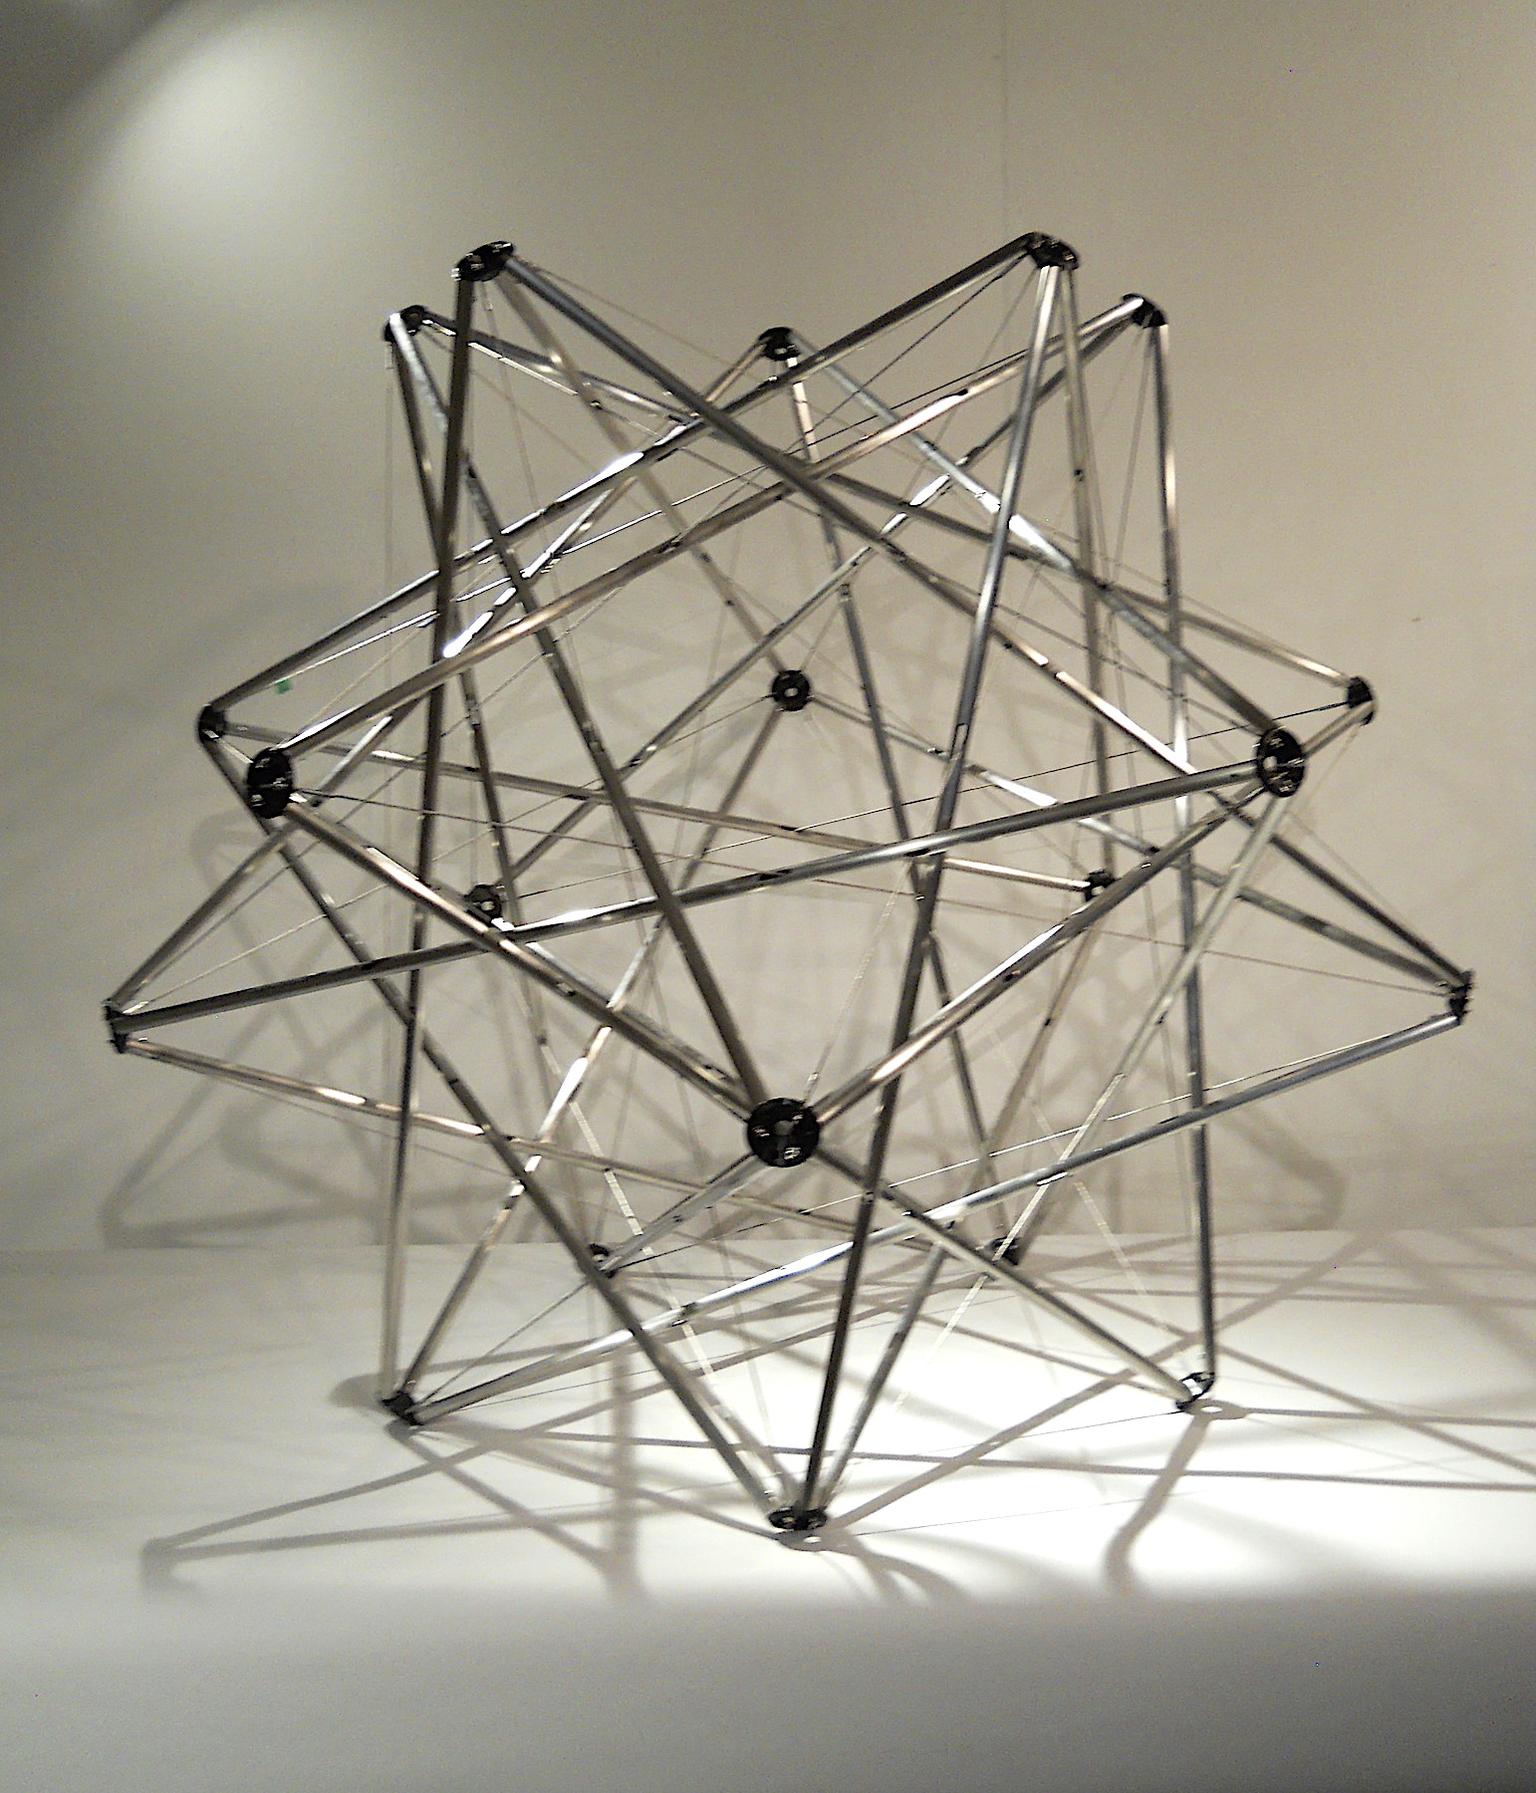 Image for entry 'Ten Tetrahedra Tensegrity'